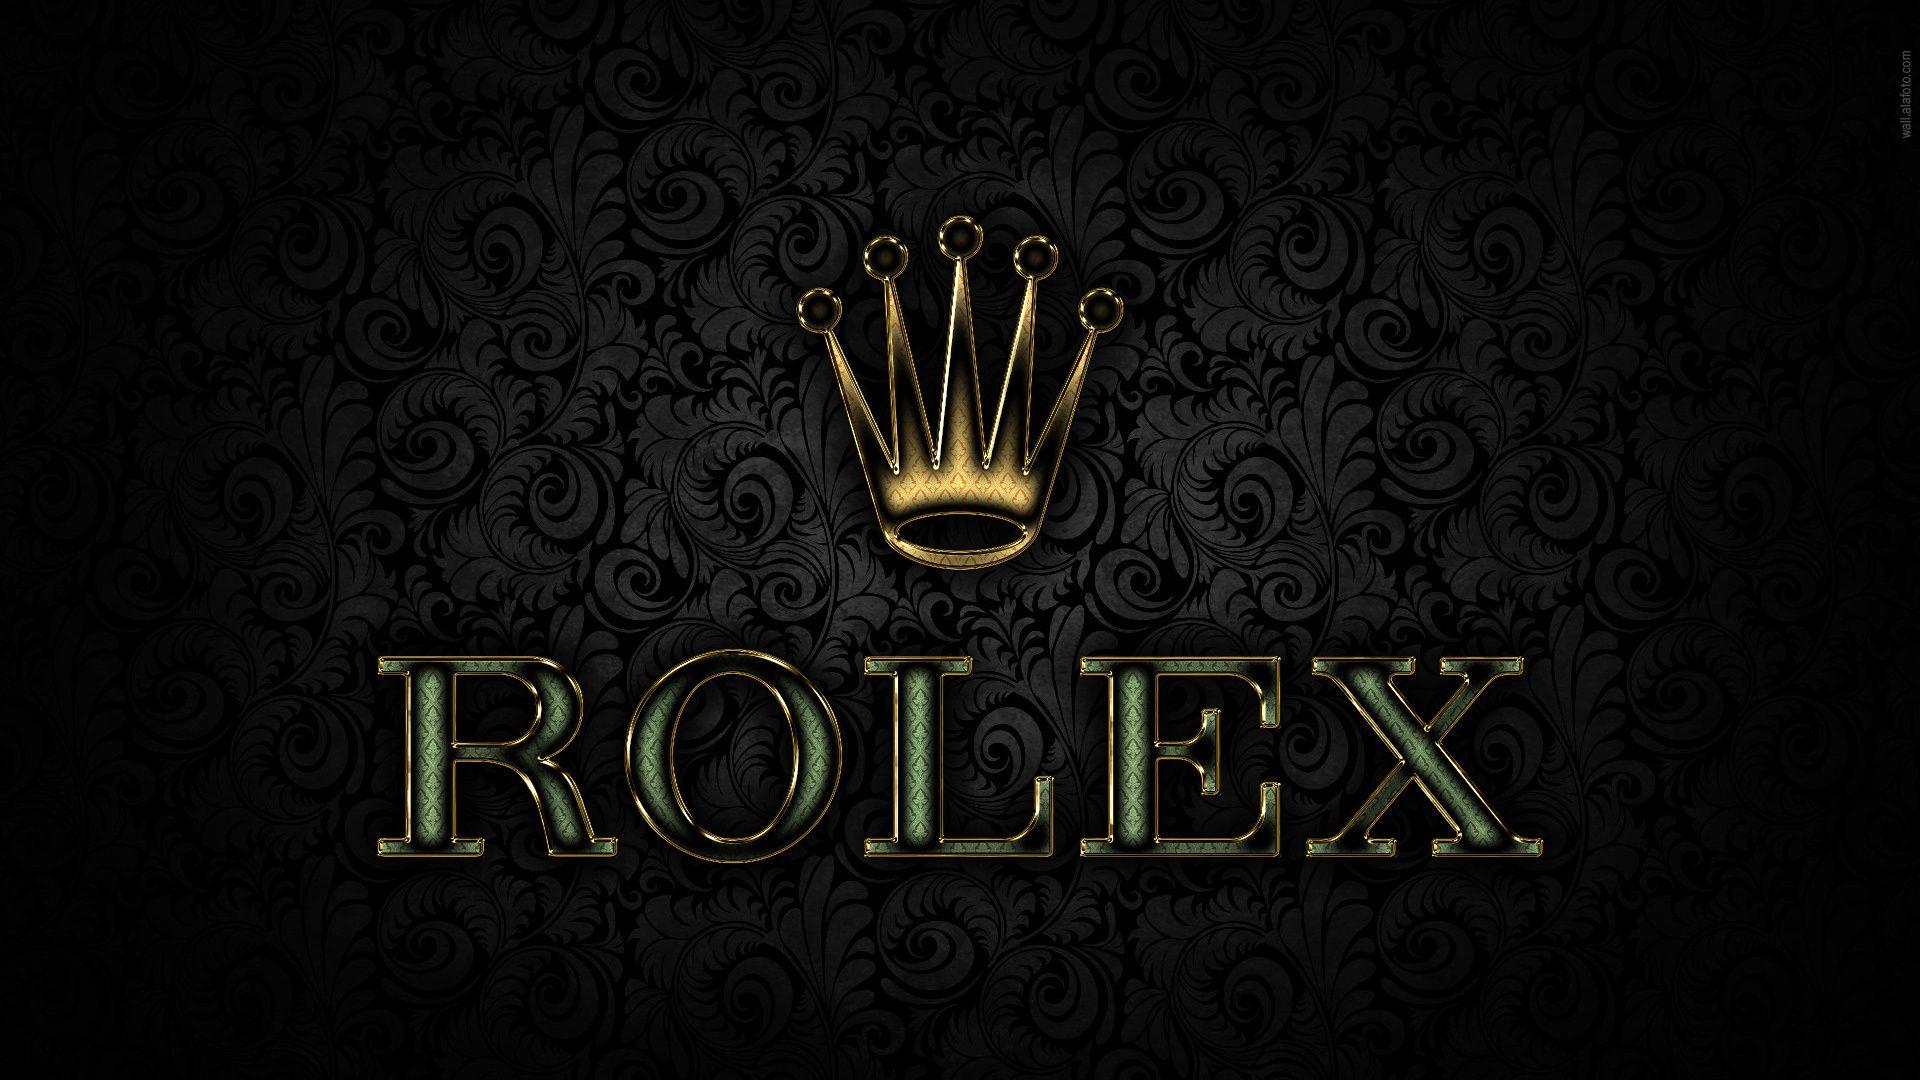 Rolex Wallpaper, Rolex Image for Desktop Handpicked Rolex